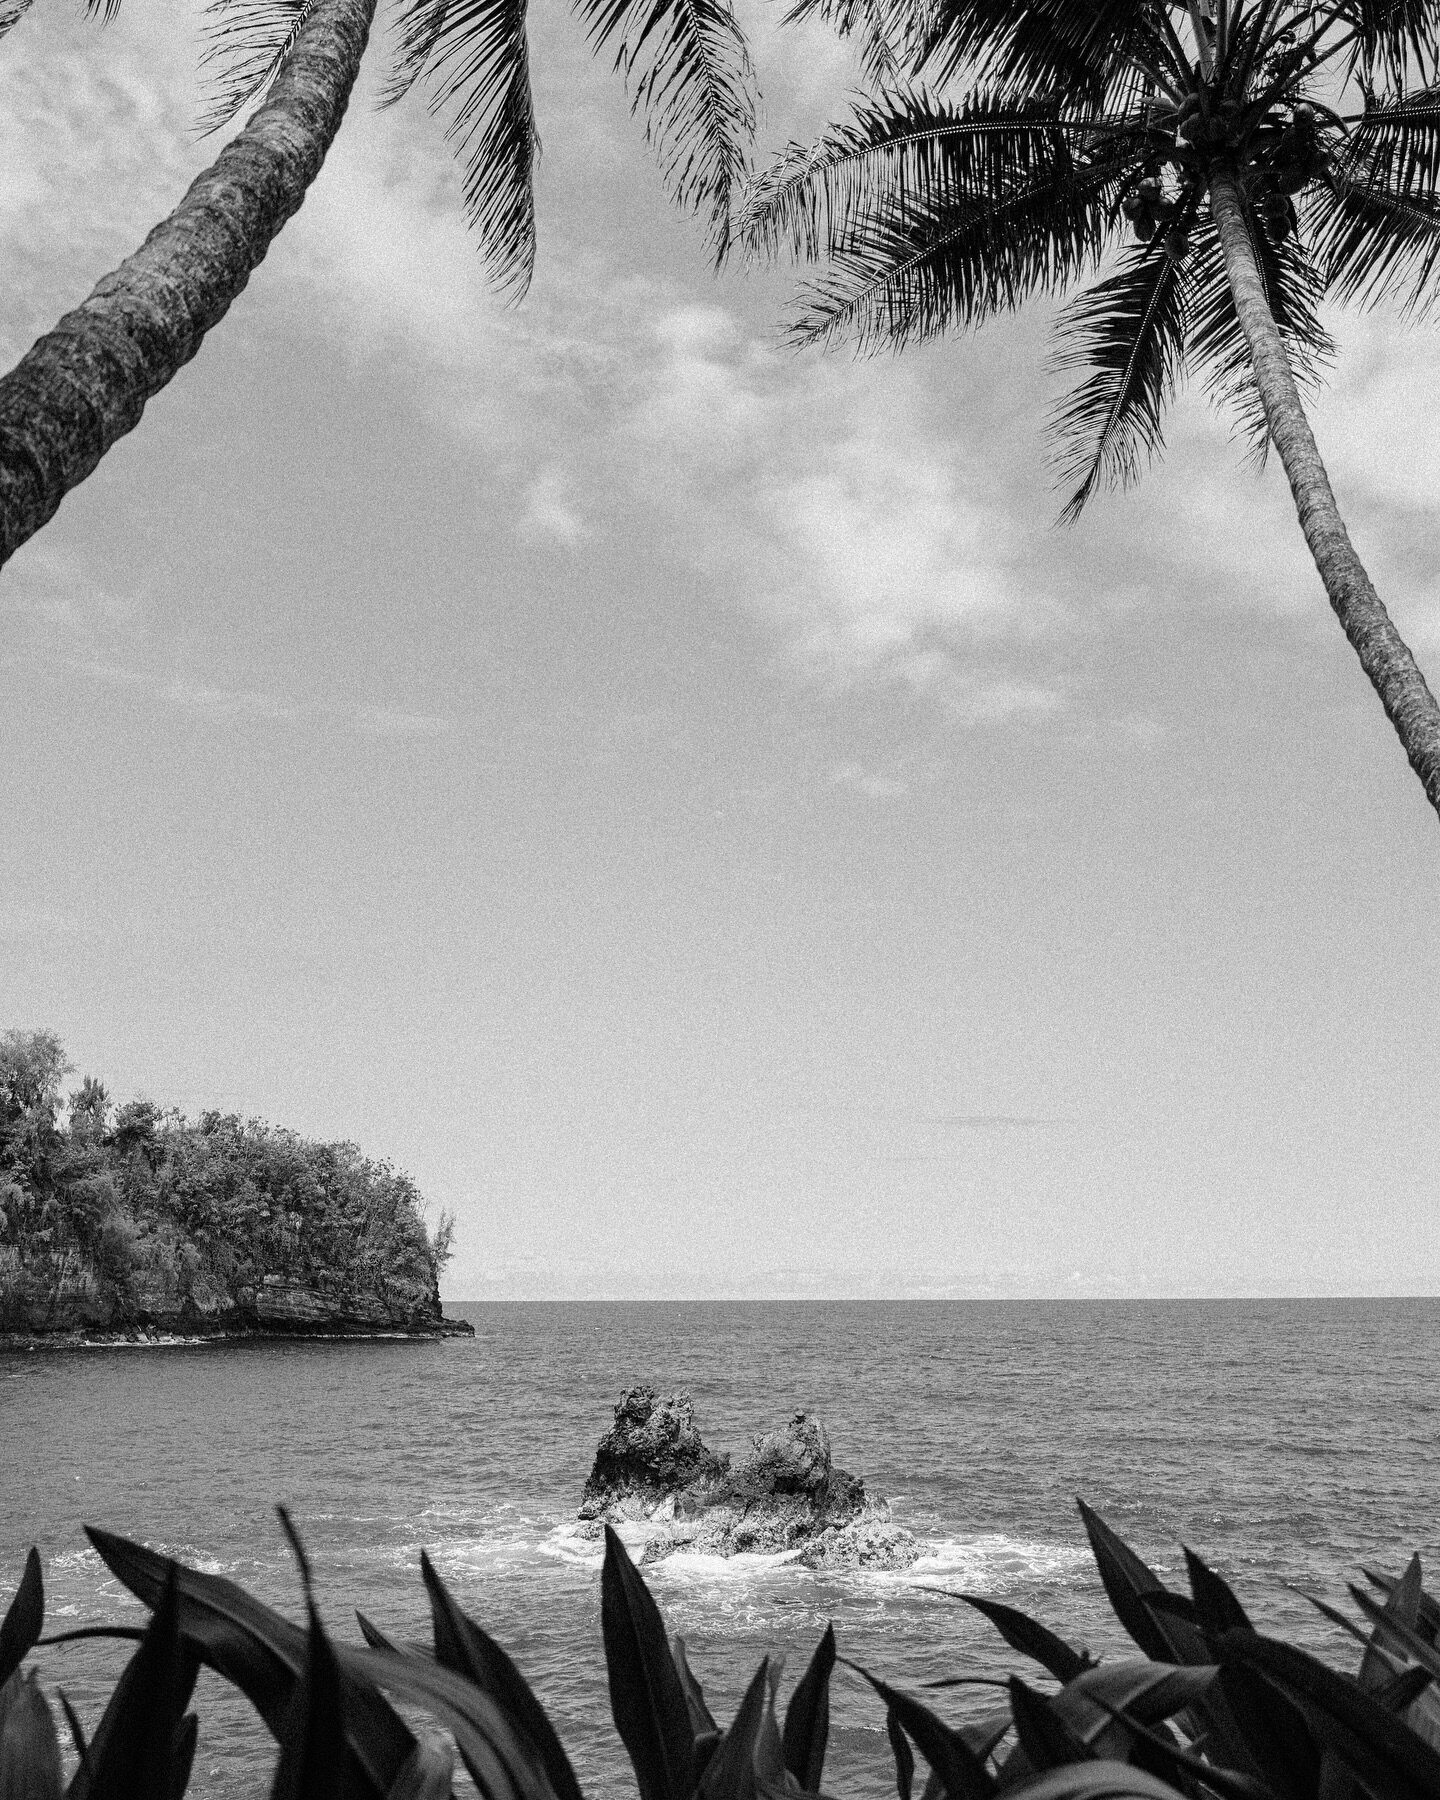 the ocean air is calling ♒︎ manifesting another beach getaway

#beachvibes #hawaii #bigisland #bigislandhawaii #oceanlover #blackandwhitephotography #leica #leicaphotography #leicacamera @leica_camera @leicacamerausa #travelphotography #travel #conde